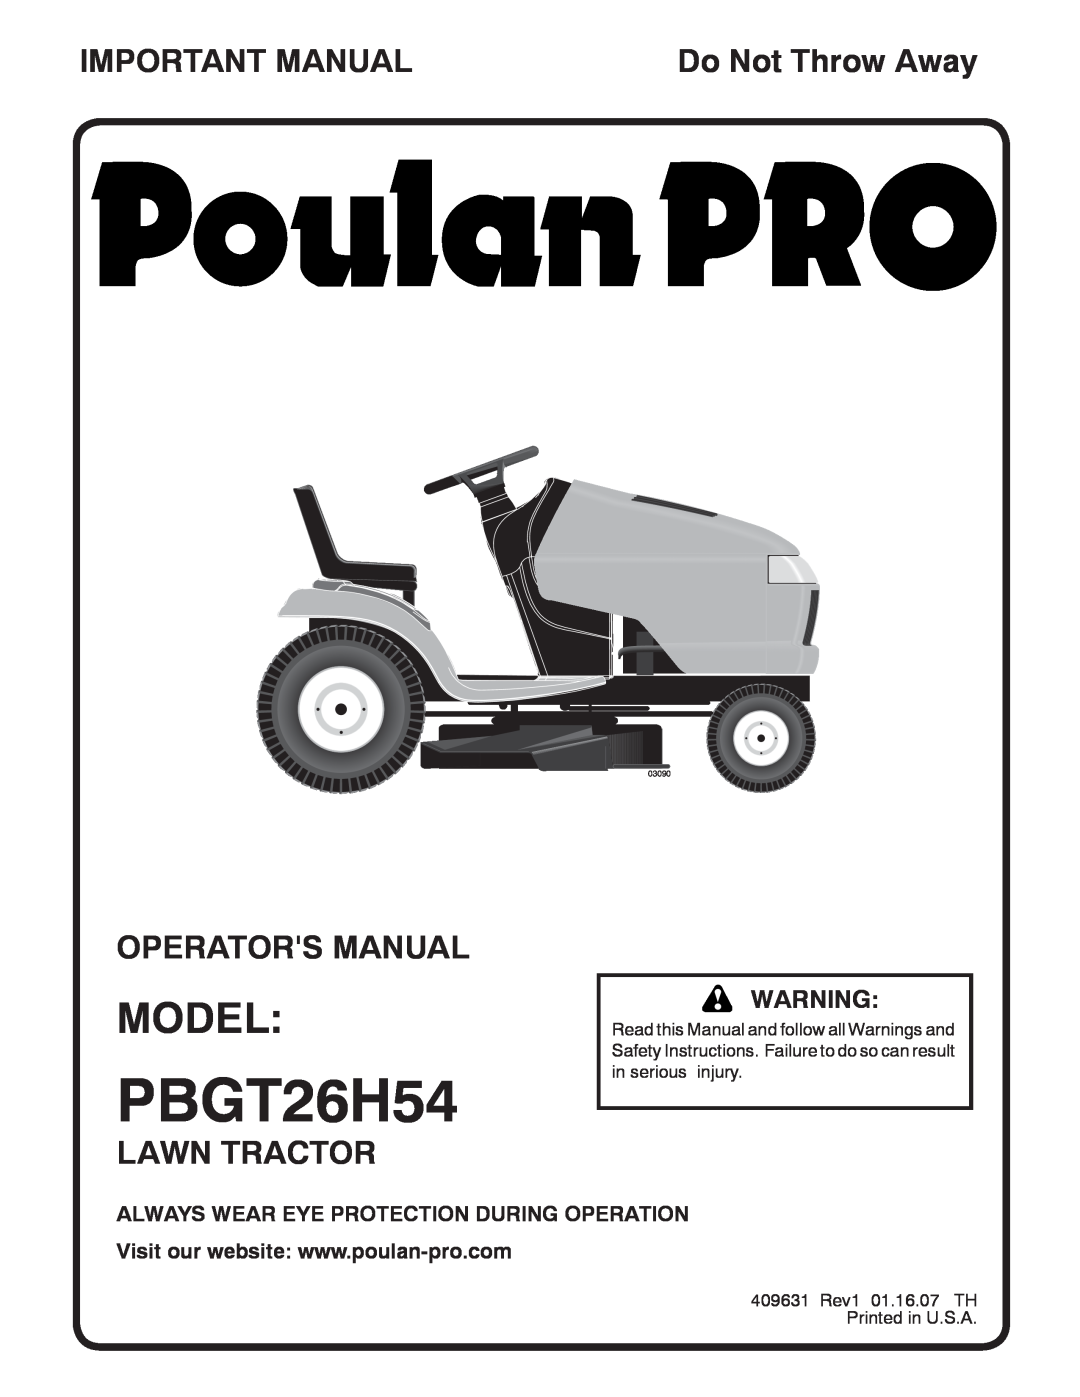 Poulan PBGT26H54 manual Model, Important Manual, Operators Manual, Lawn Tractor, Do Not Throw Away, 03090 